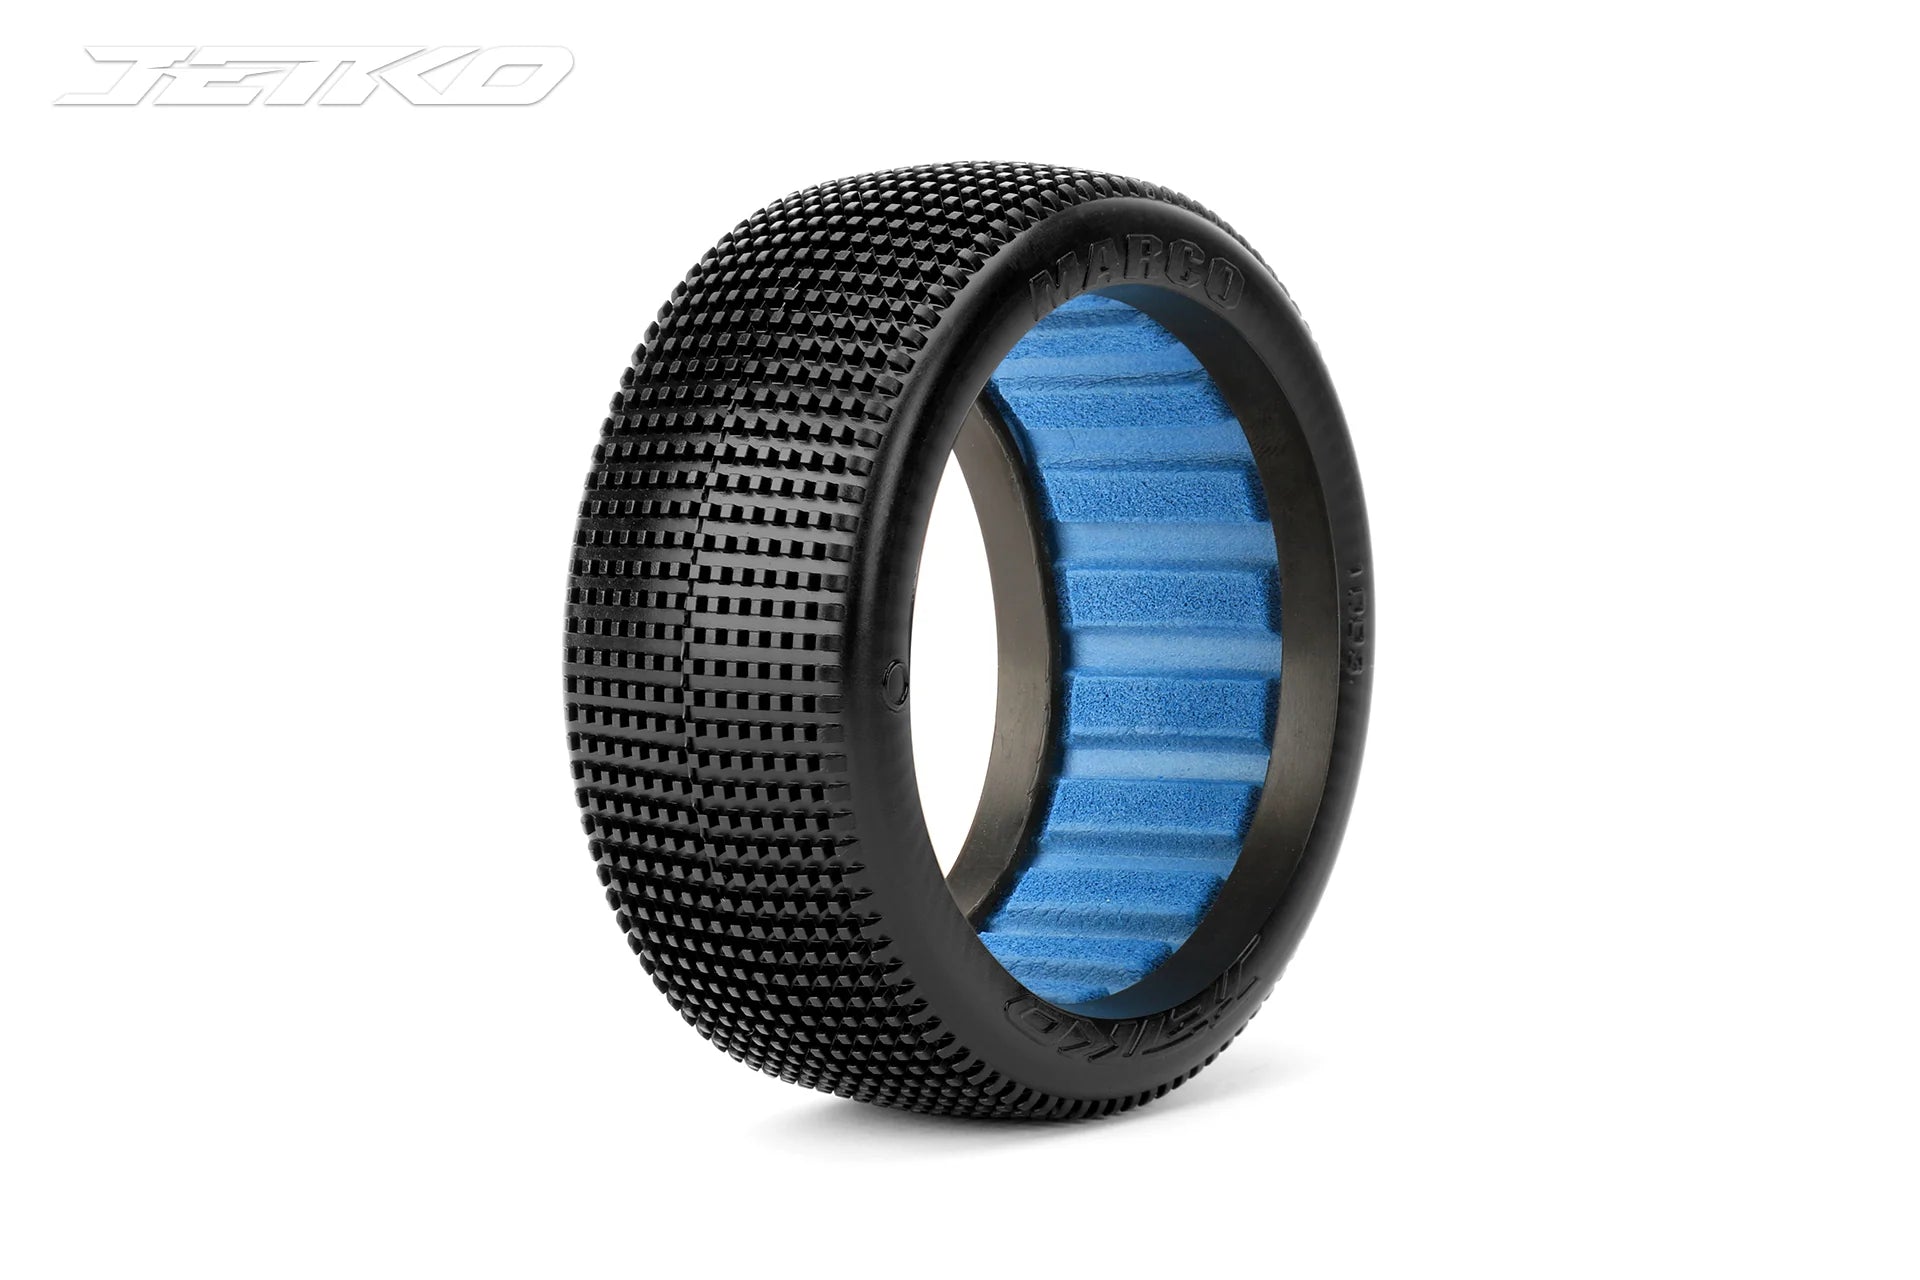 Jetko 1/8 Marco Buggy tires (Dish/White Rim/Super Soft) (2Pcs) [1003Dwssg] - [Sunshine-Coast] - Jetko - [RC-Car] - [Scale-Model]